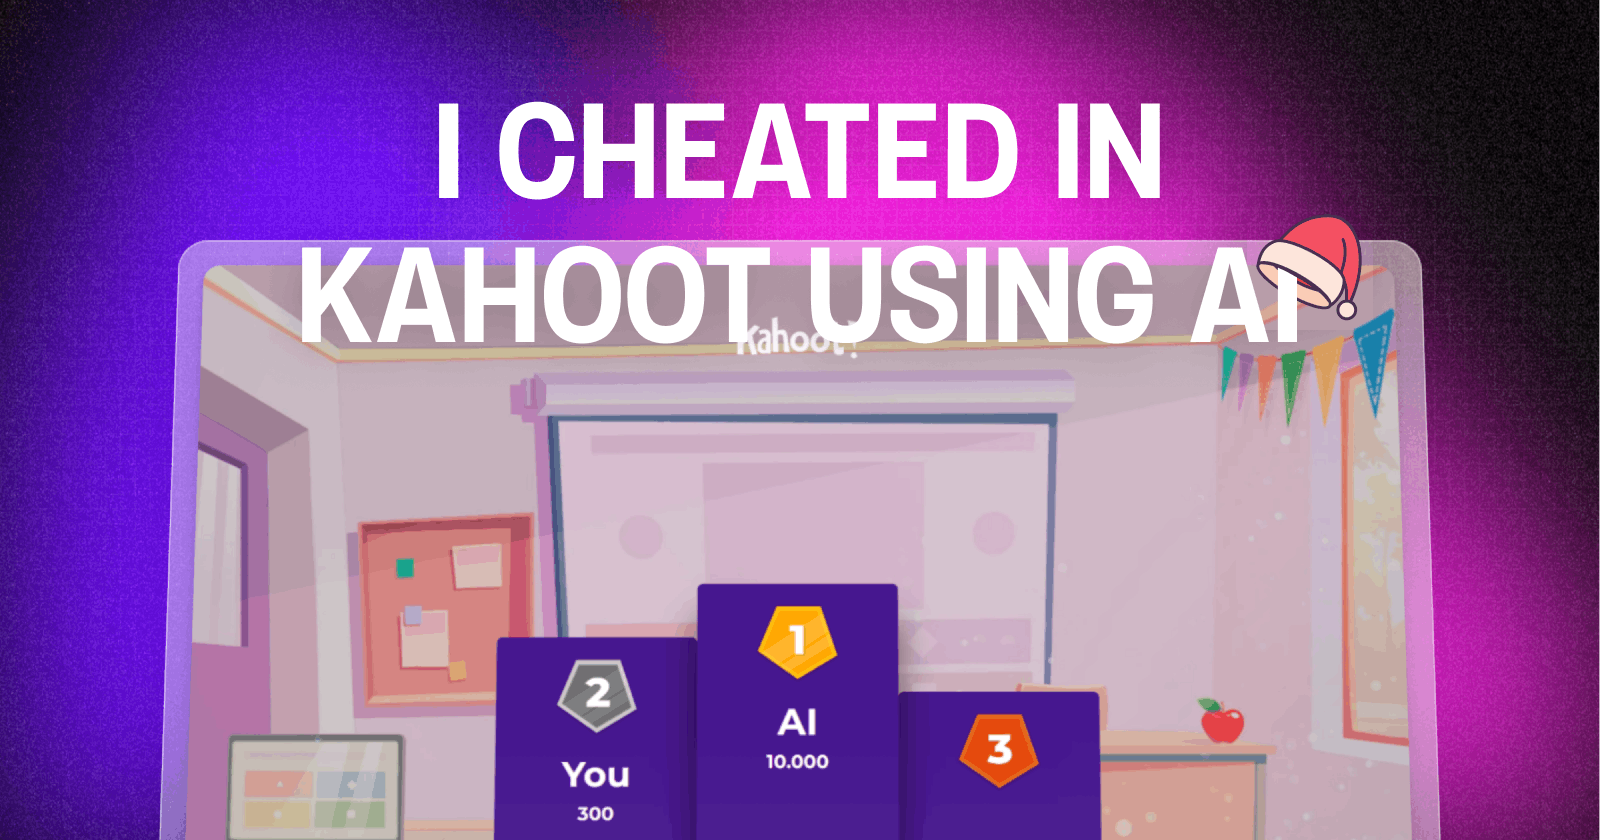 I cheated in Kahoot using AI